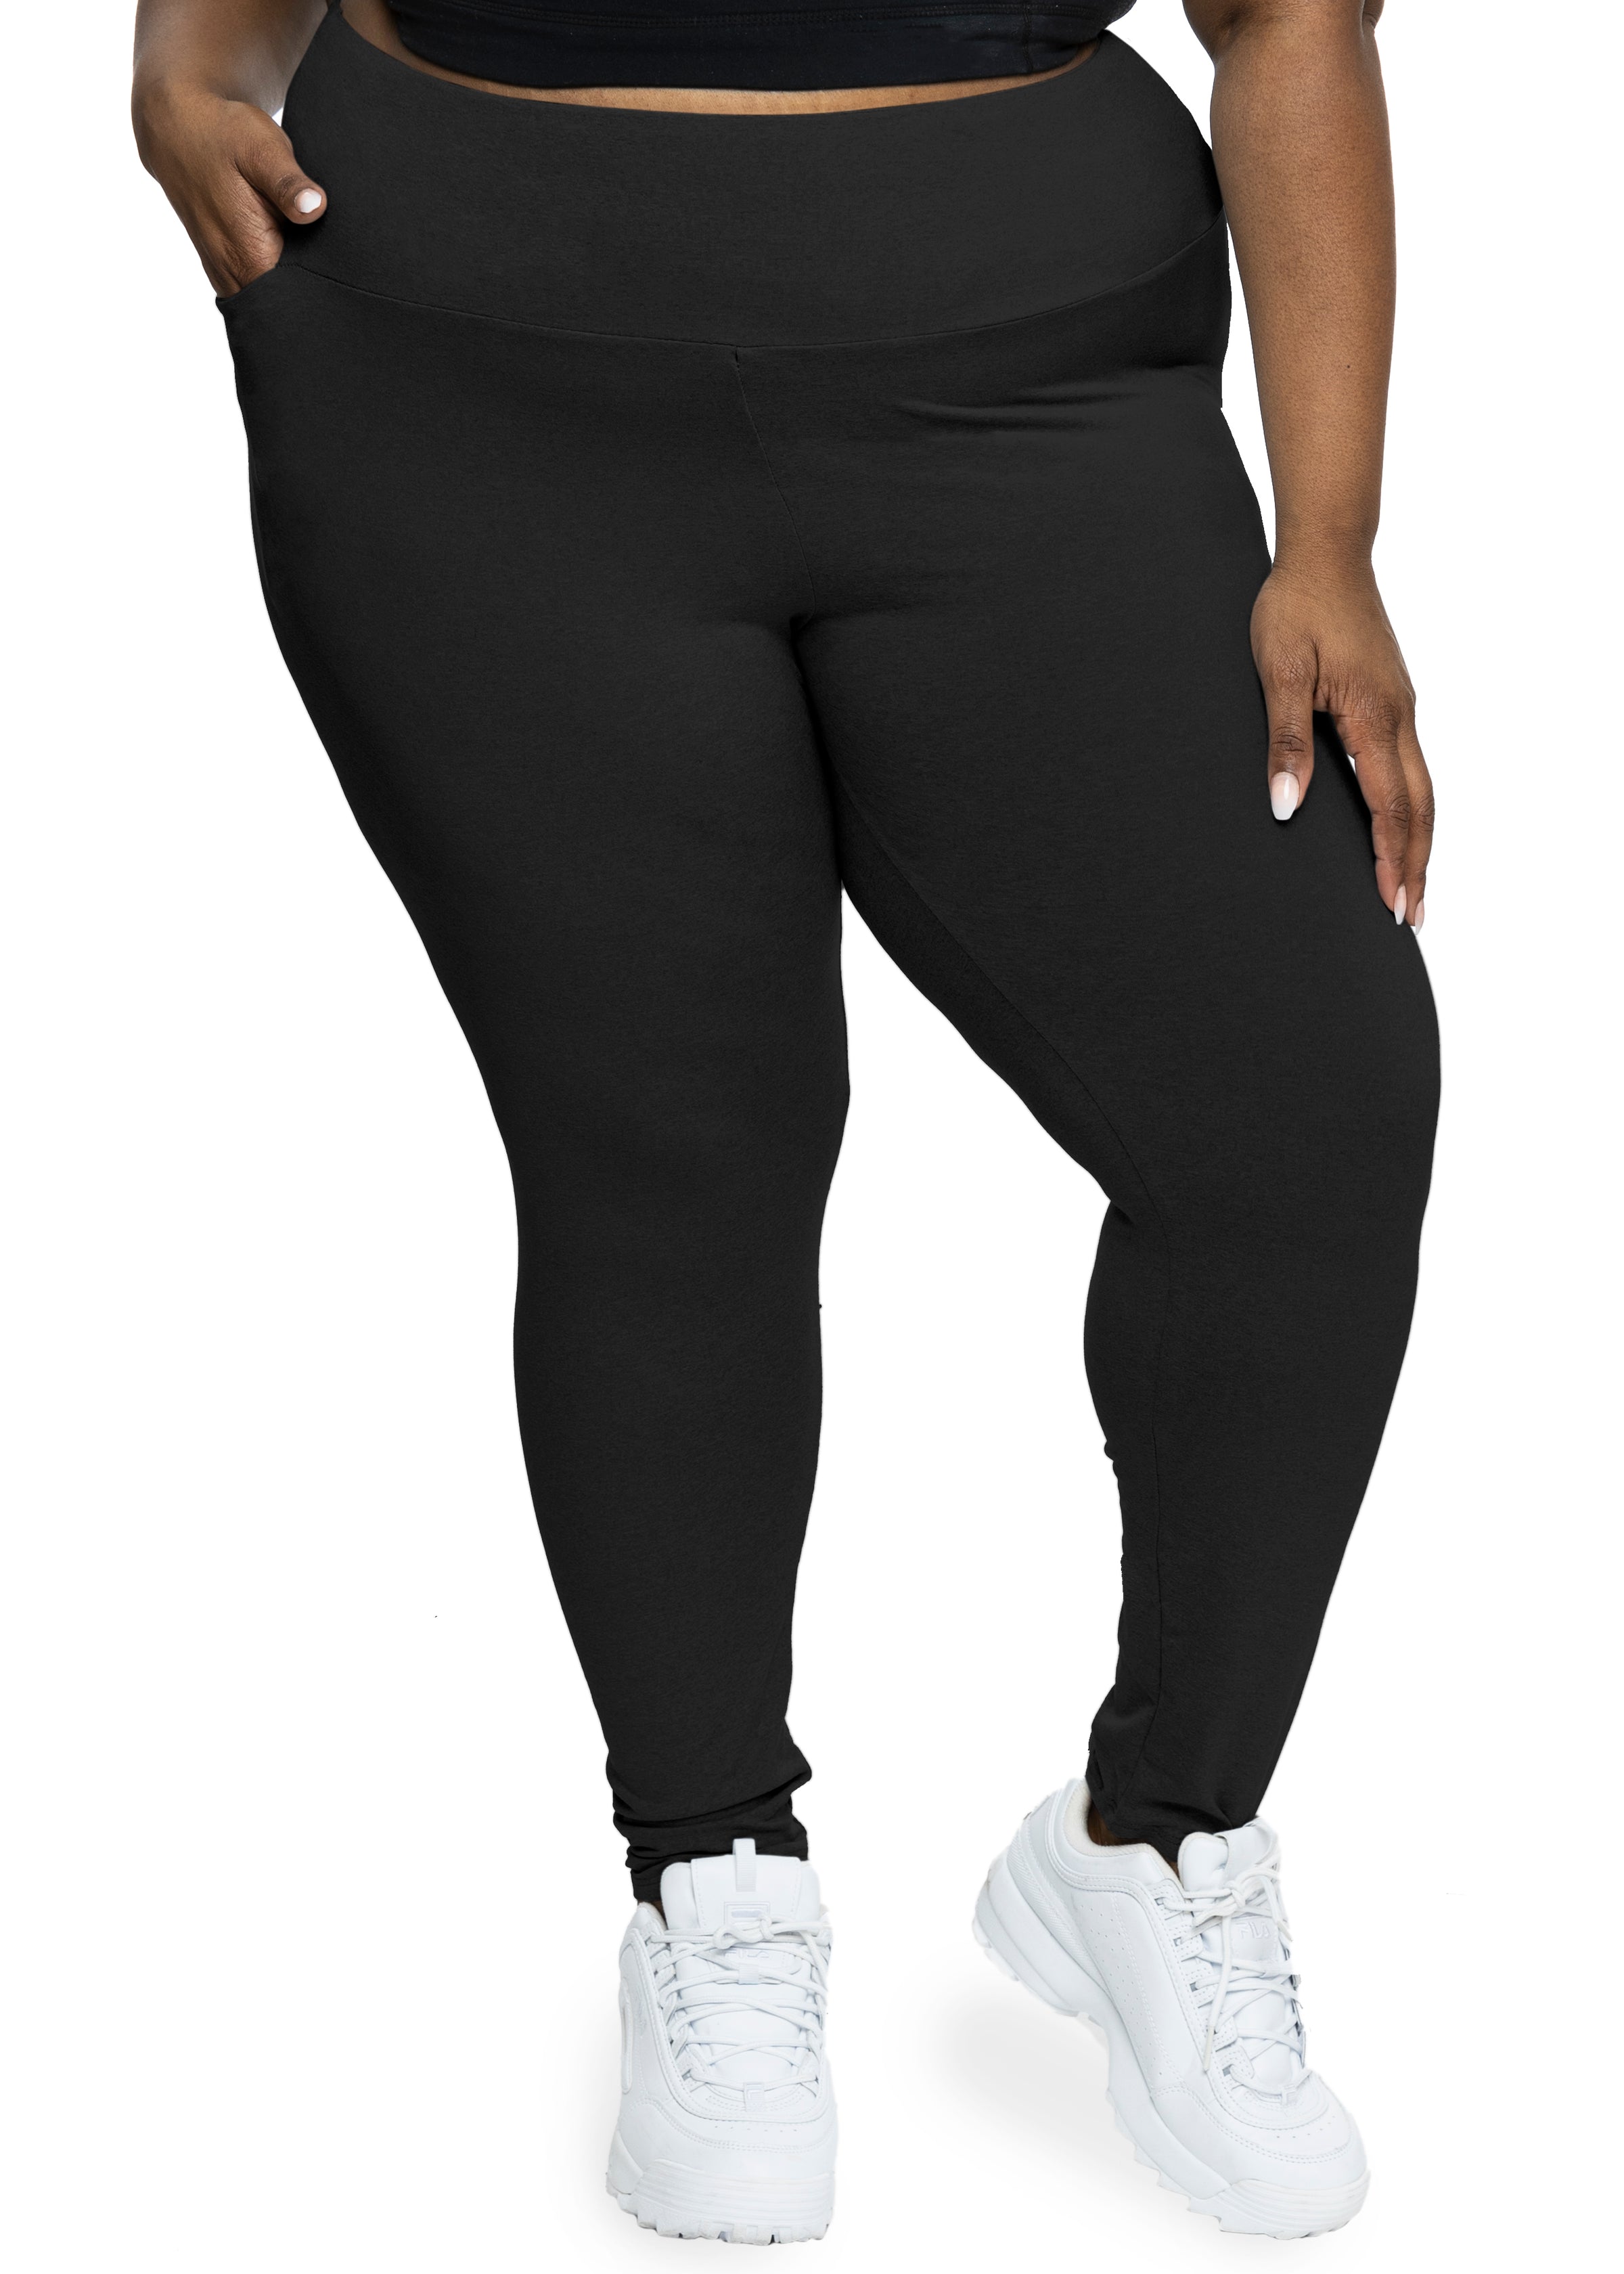 YHWW Leggings,Casual Leggings Women Black Plus Size Elastic